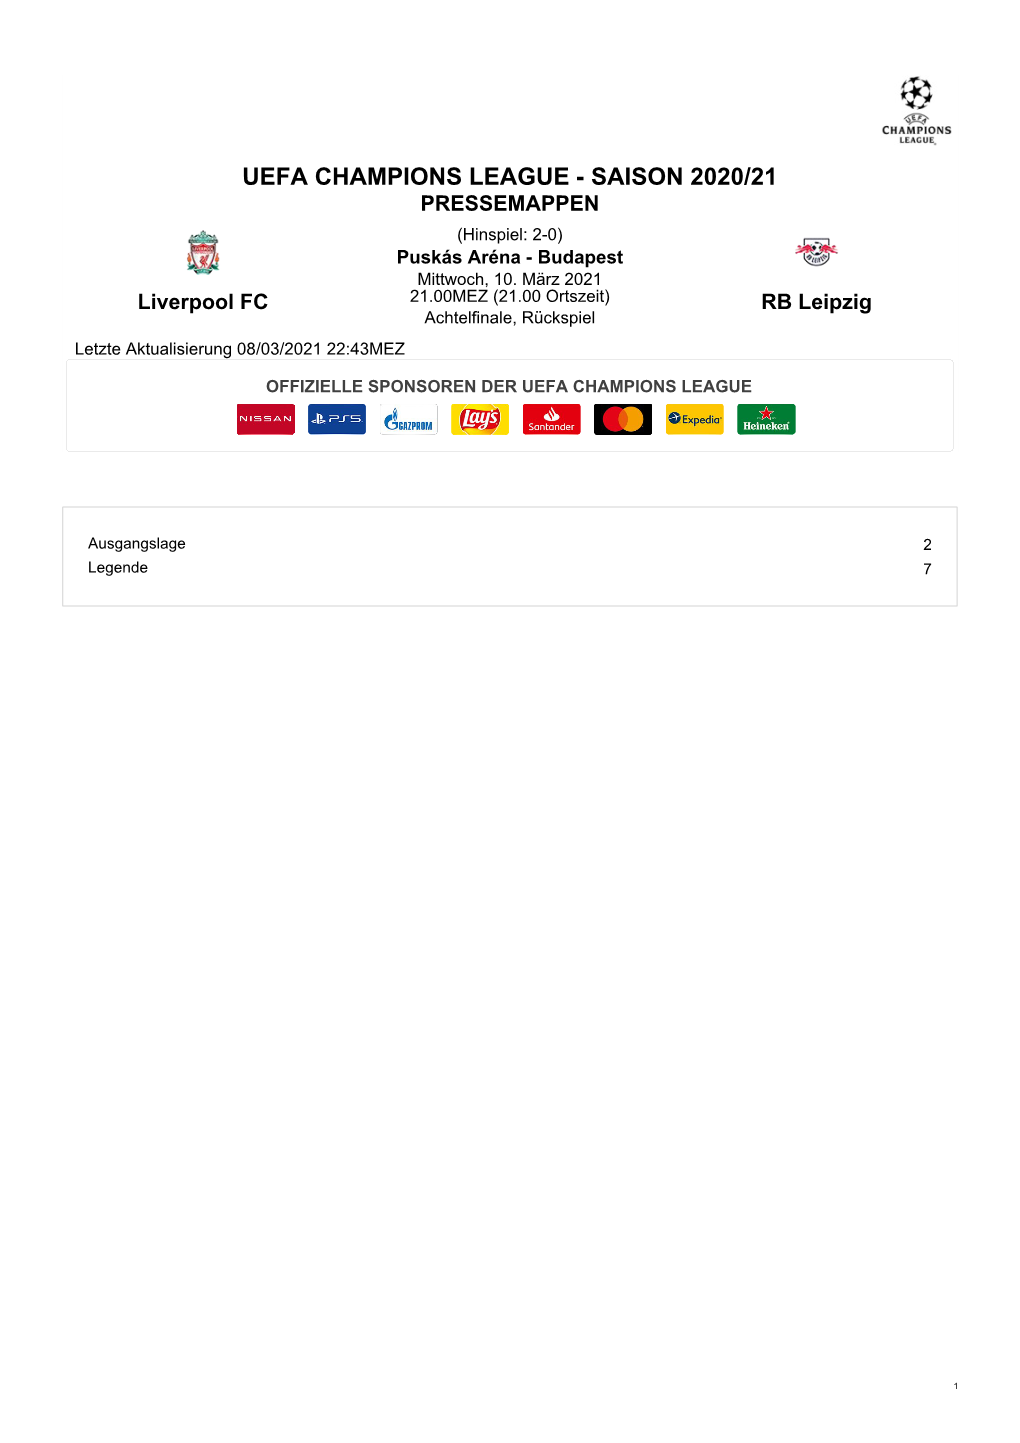 UEFA CHAMPIONS LEAGUE - SAISON 2020/21 PRESSEMAPPEN (Hinspiel: 2-0) Puskás Aréna - Budapest Mittwoch, 10